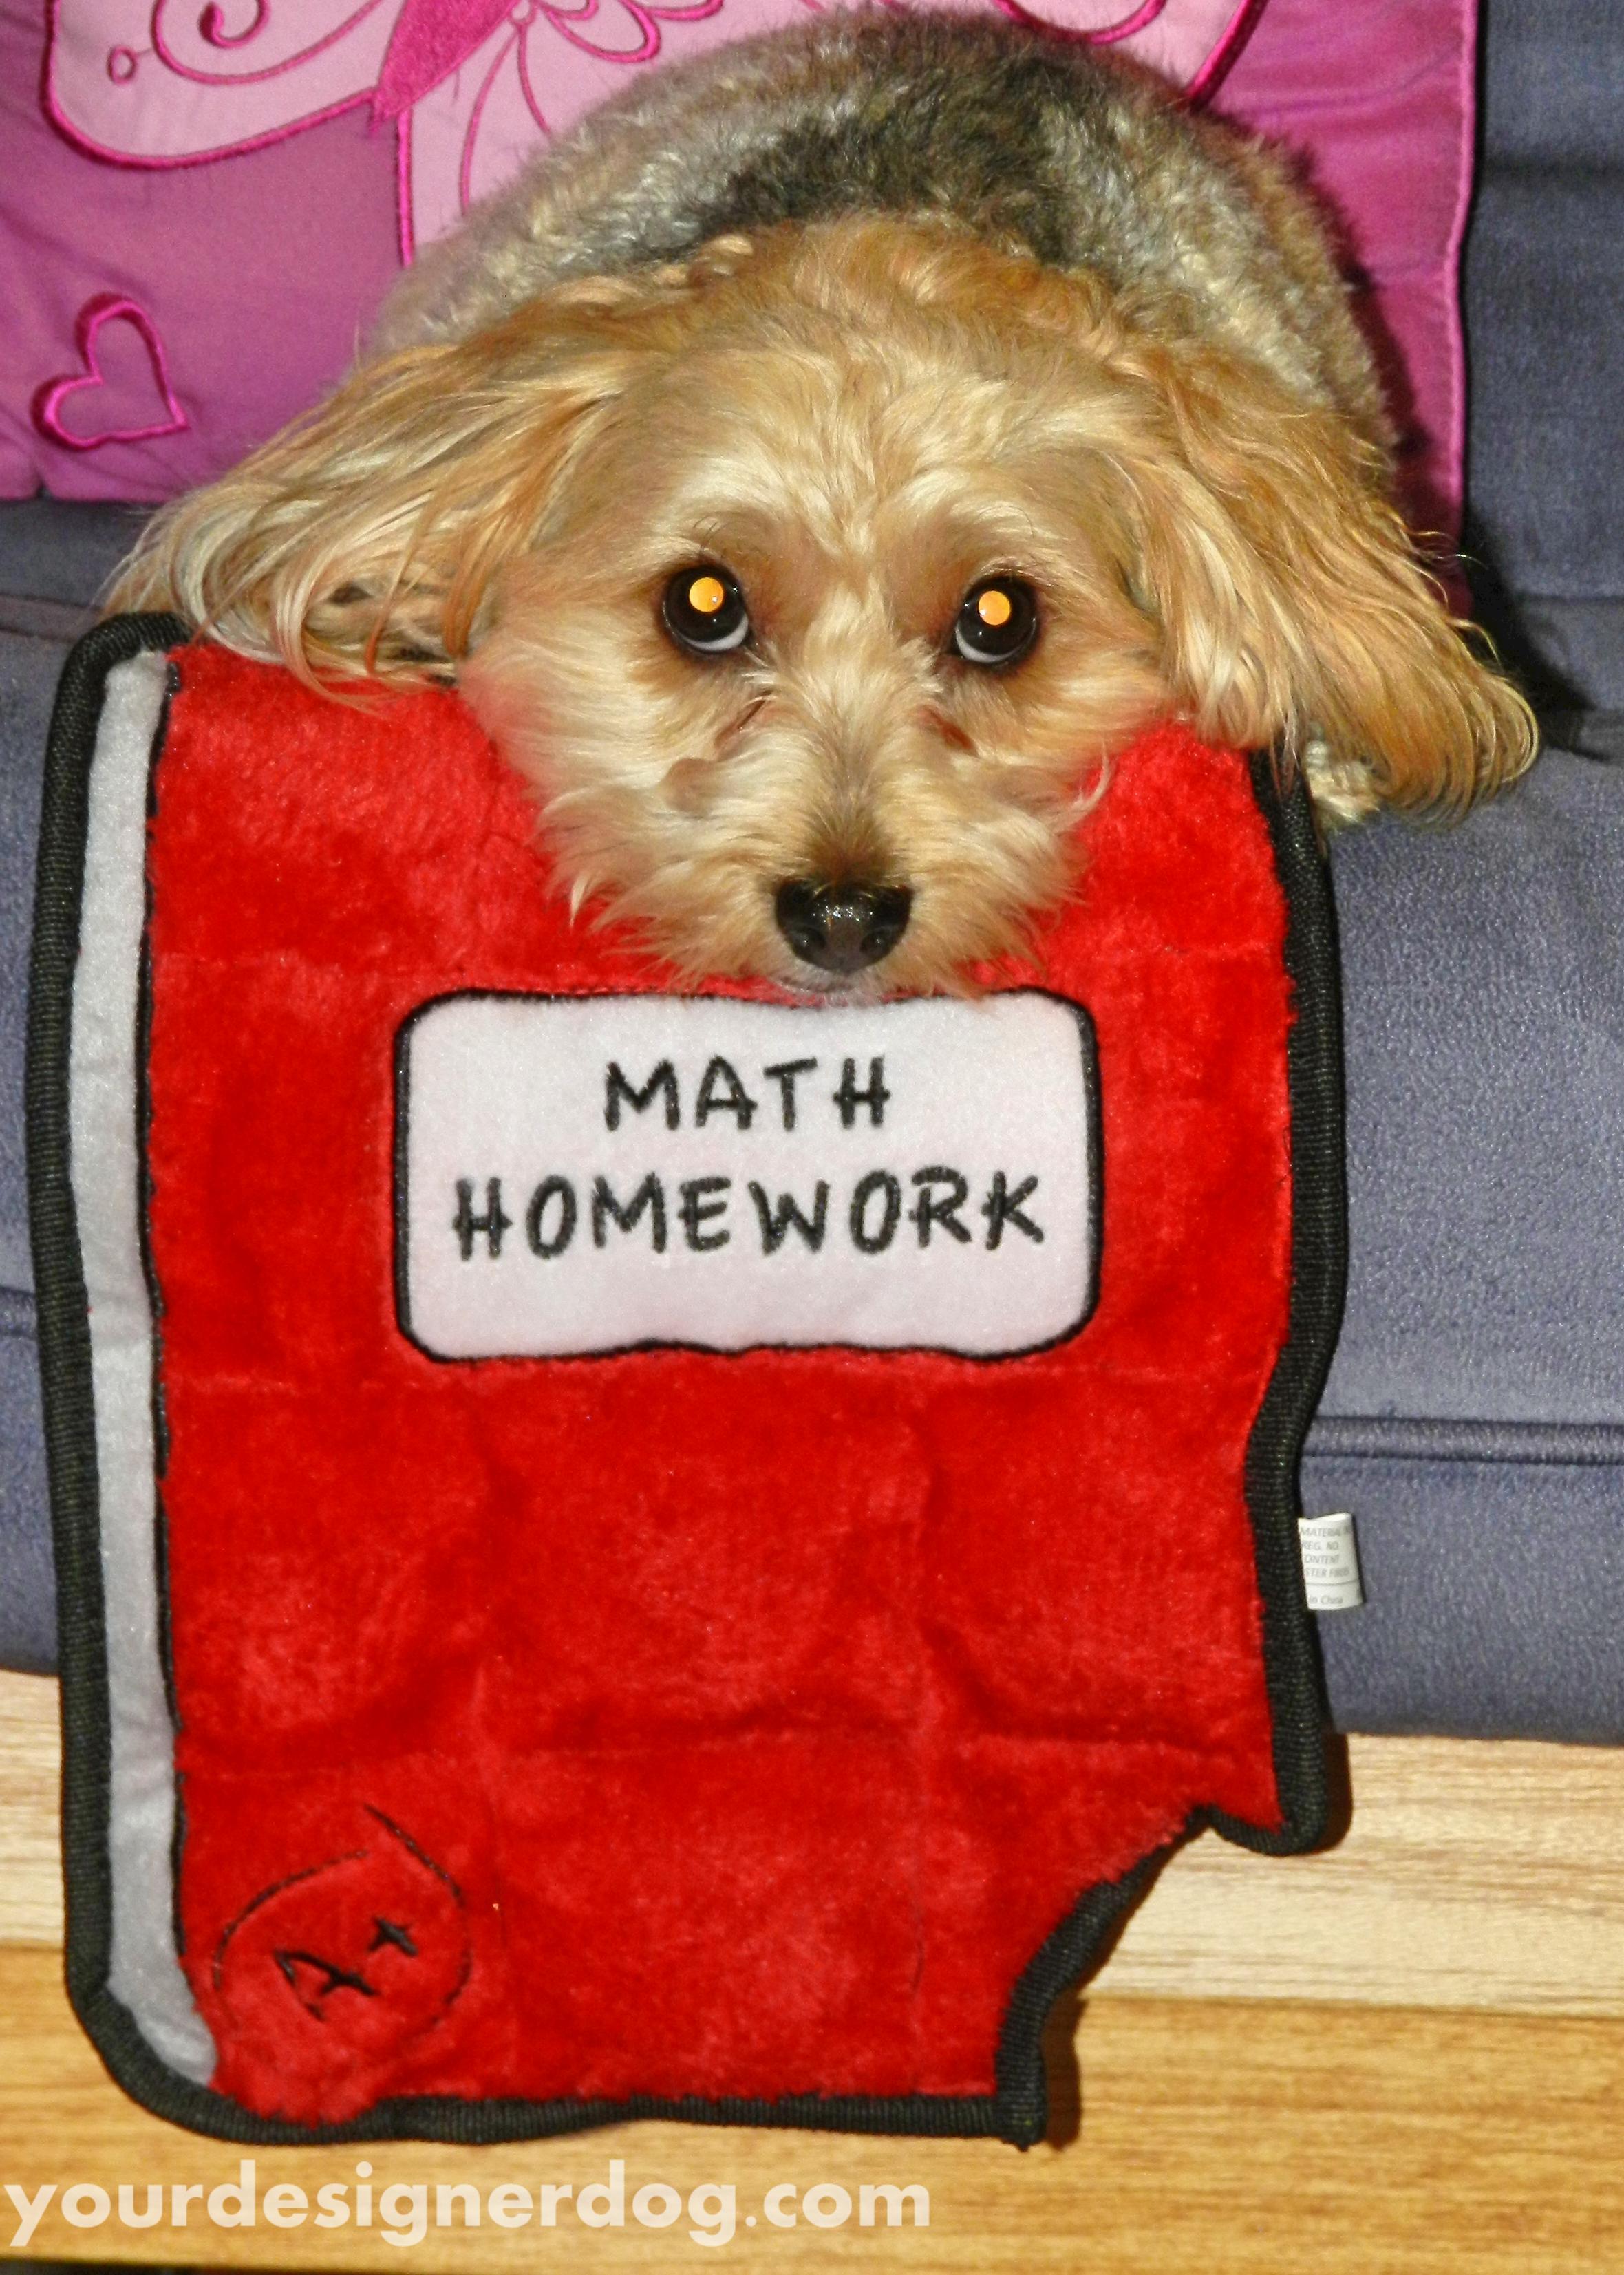 The Dog Ate My Homework! – YourDesignerDog